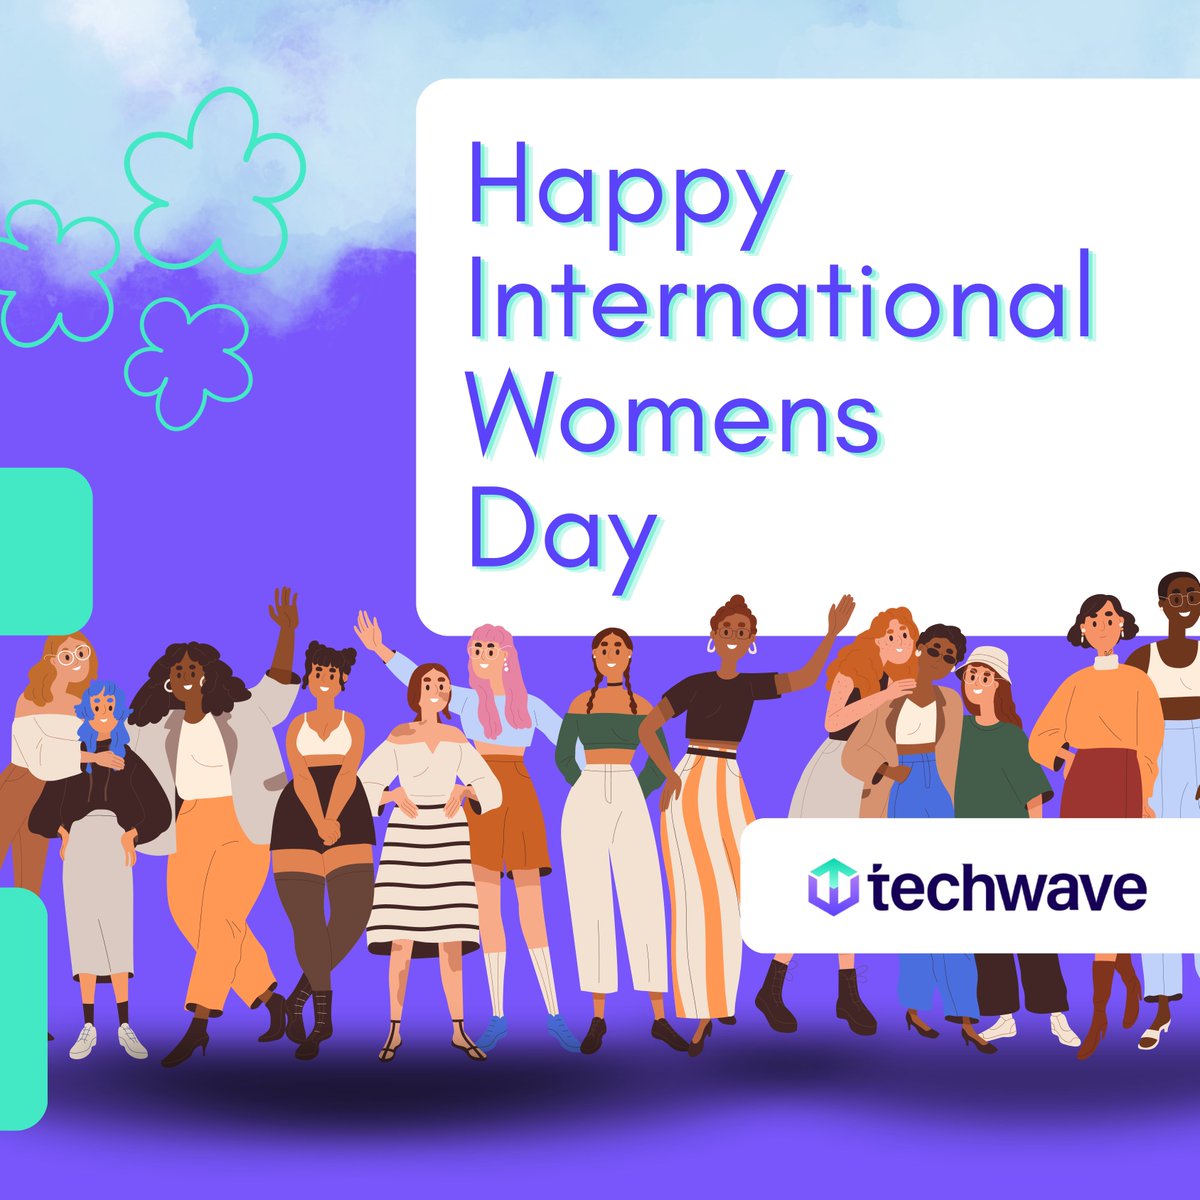 Happy International Women's day!!
#InspiretoInclude

#techwave #InternationalWomensDay